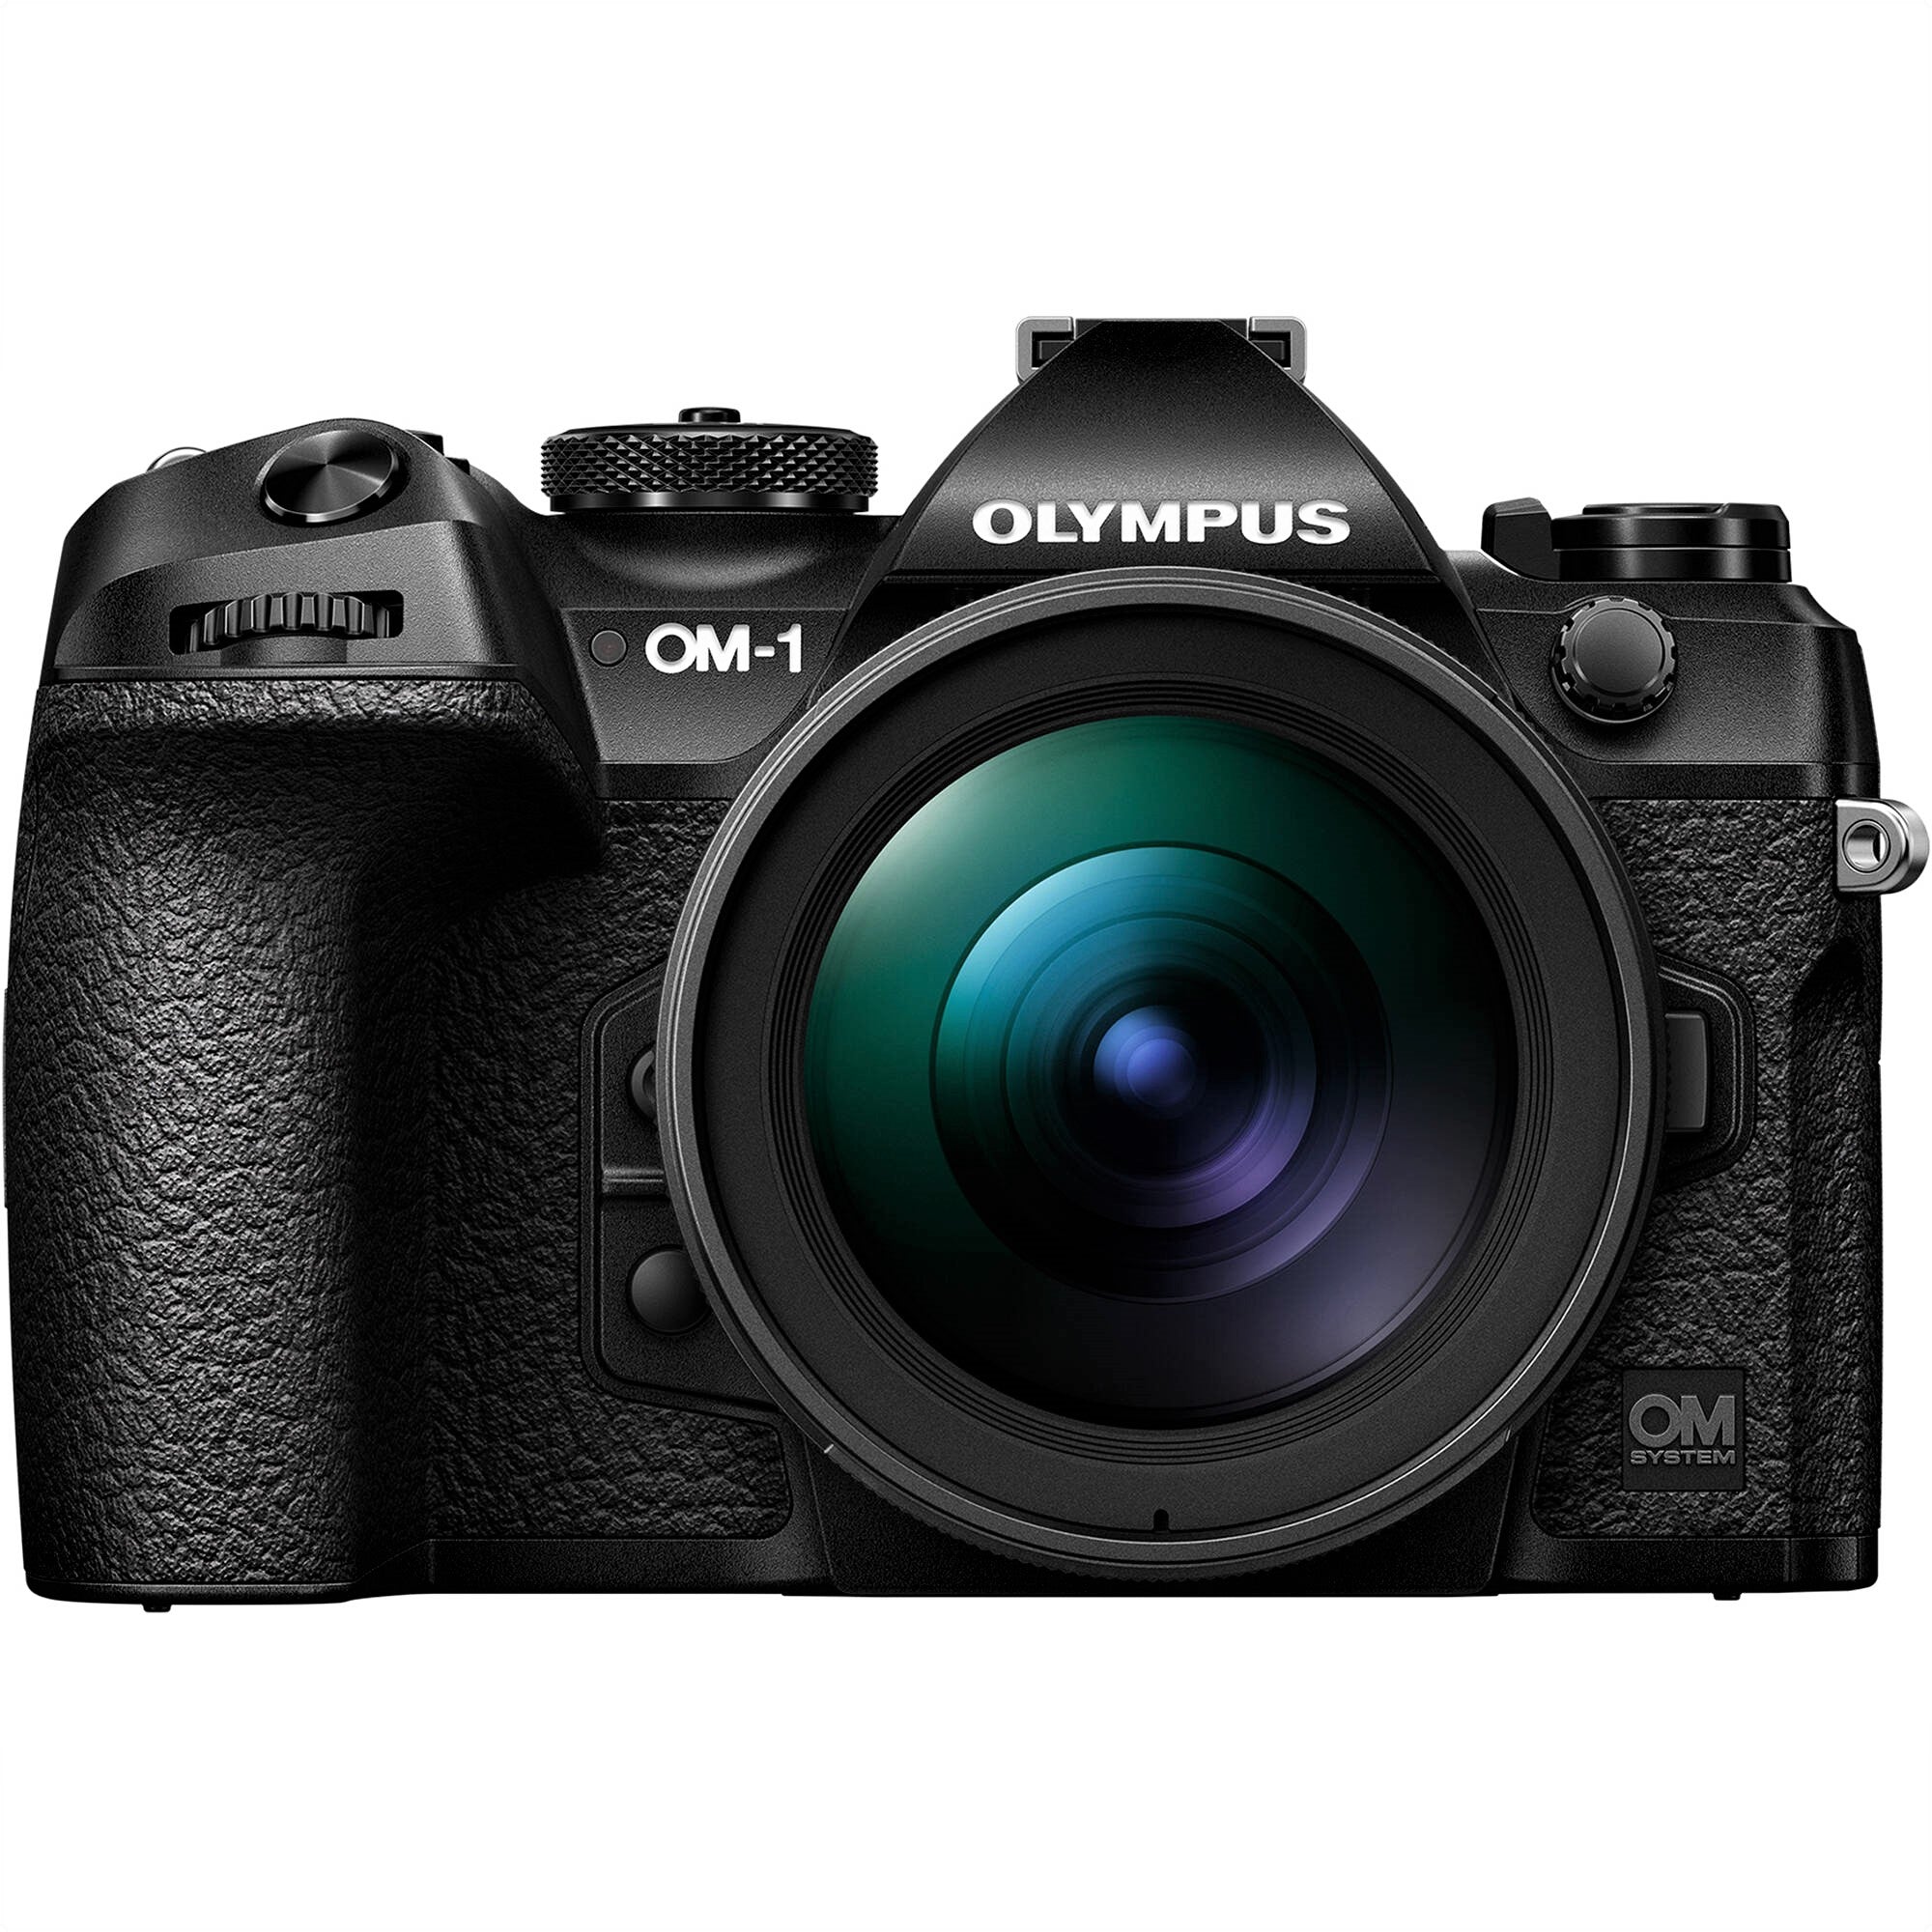 Olympus OM SYSTEM OM-1 Mirrorless Camera with 12-40mm F2.8 Lens